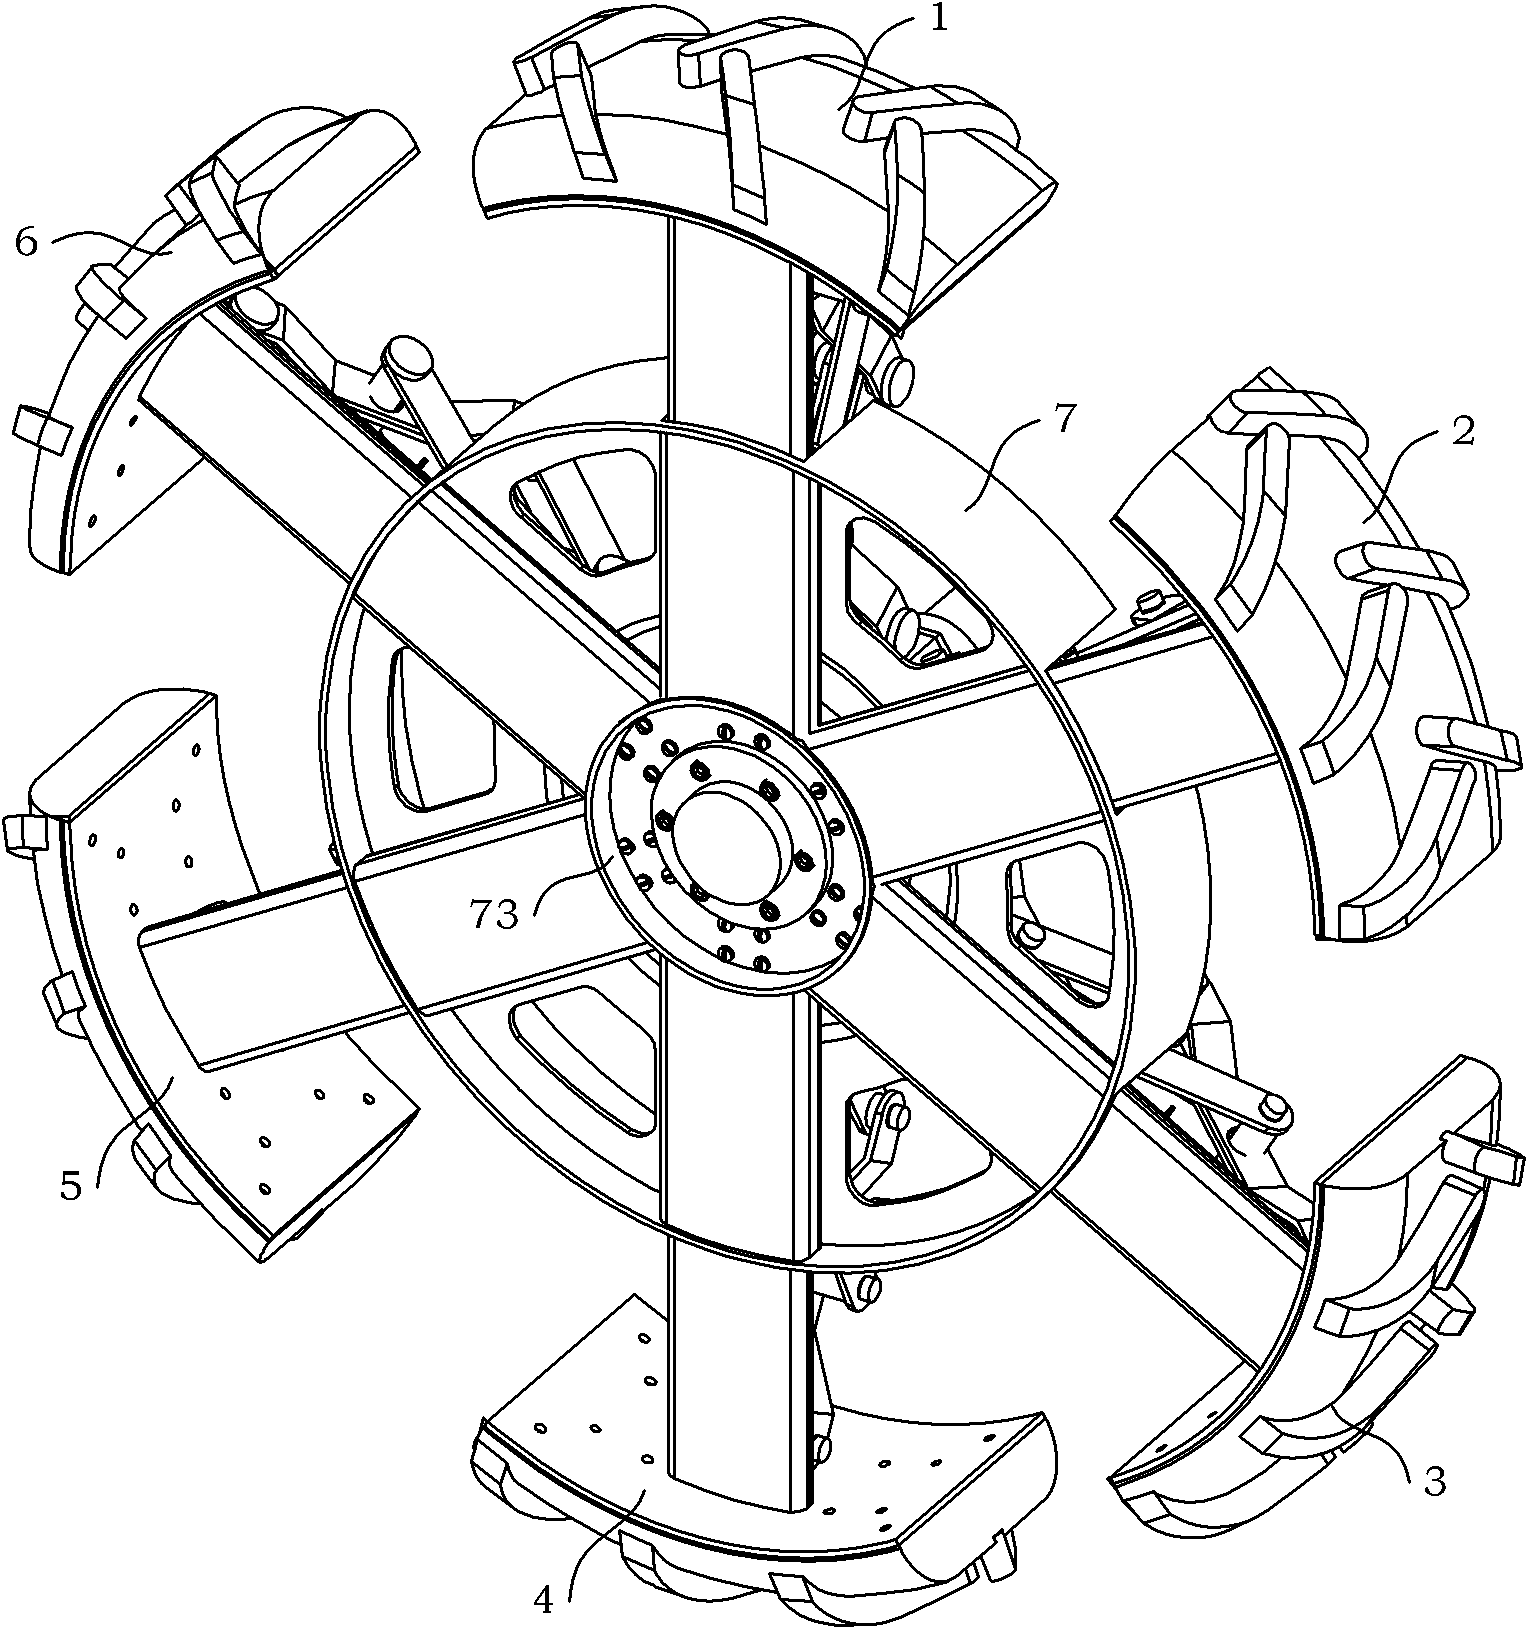 Four-bar linkage wheel carrier suitable for diameter-variable semi-walking wheel